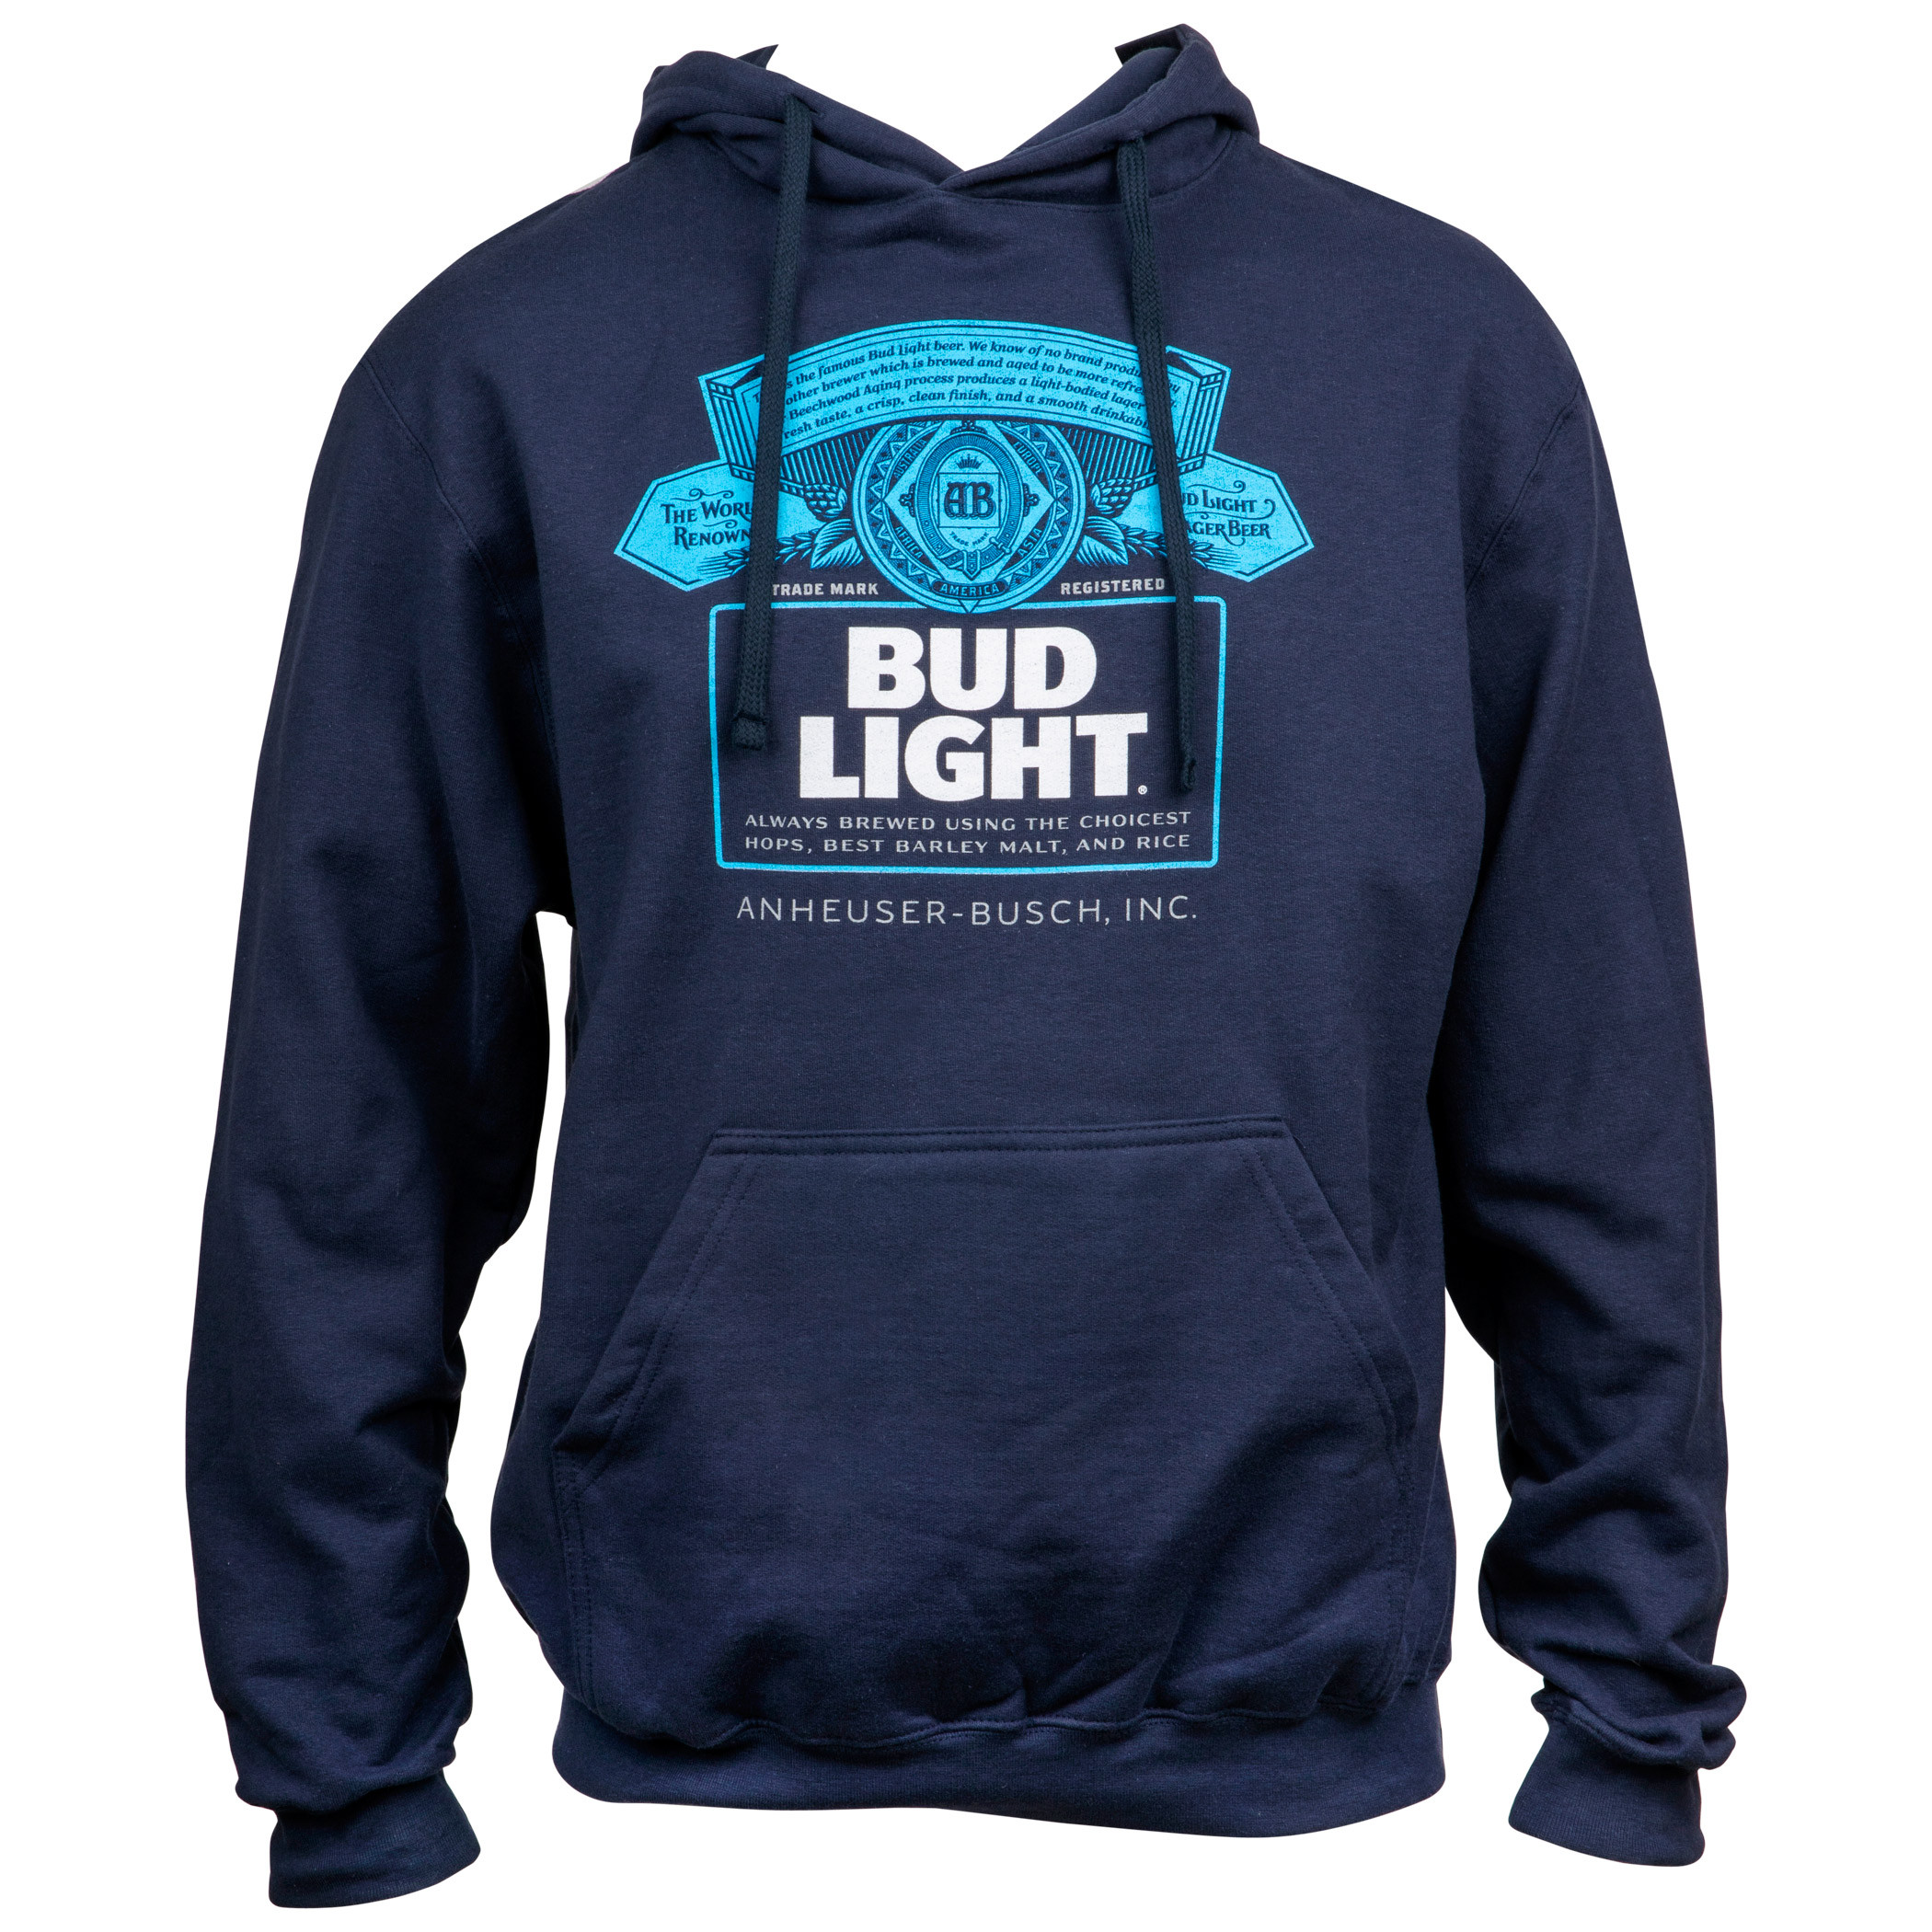 Bud Light Bottle Label Navy Blue Hoodie